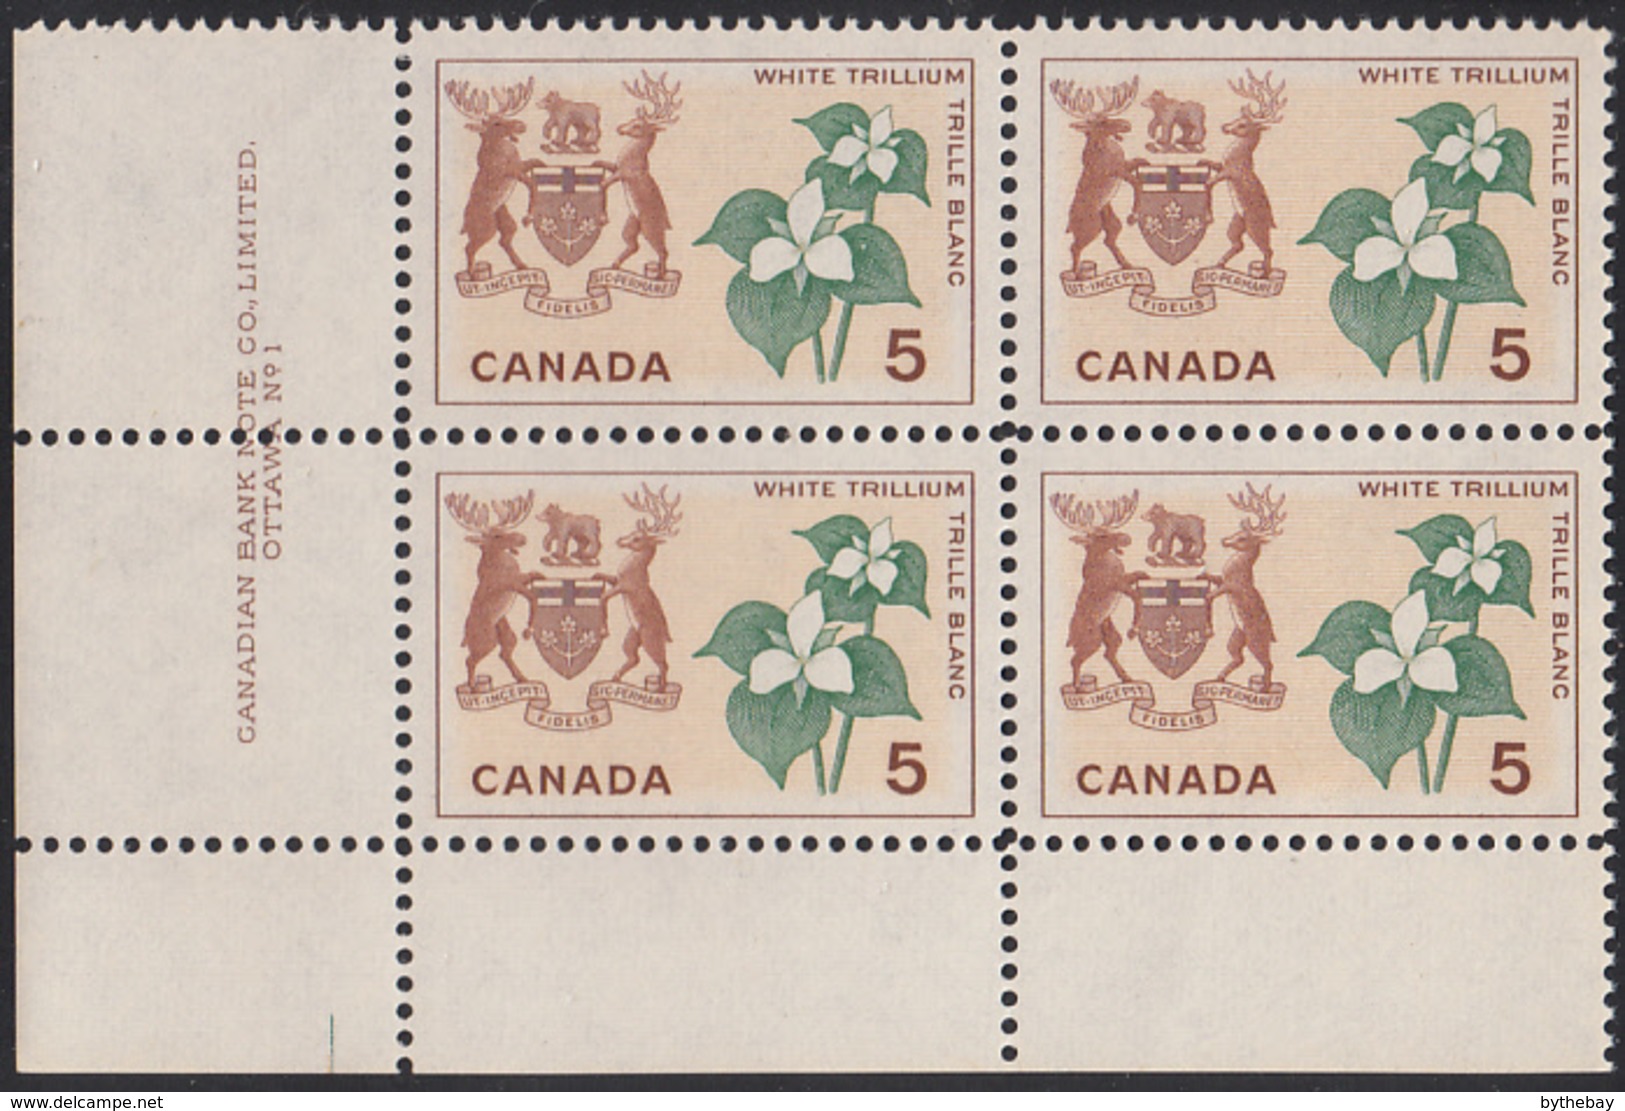 Canada 1964 MNH Sc #418 5c White Trillium Ontario Plate #1 LL - Num. Planches & Inscriptions Marge